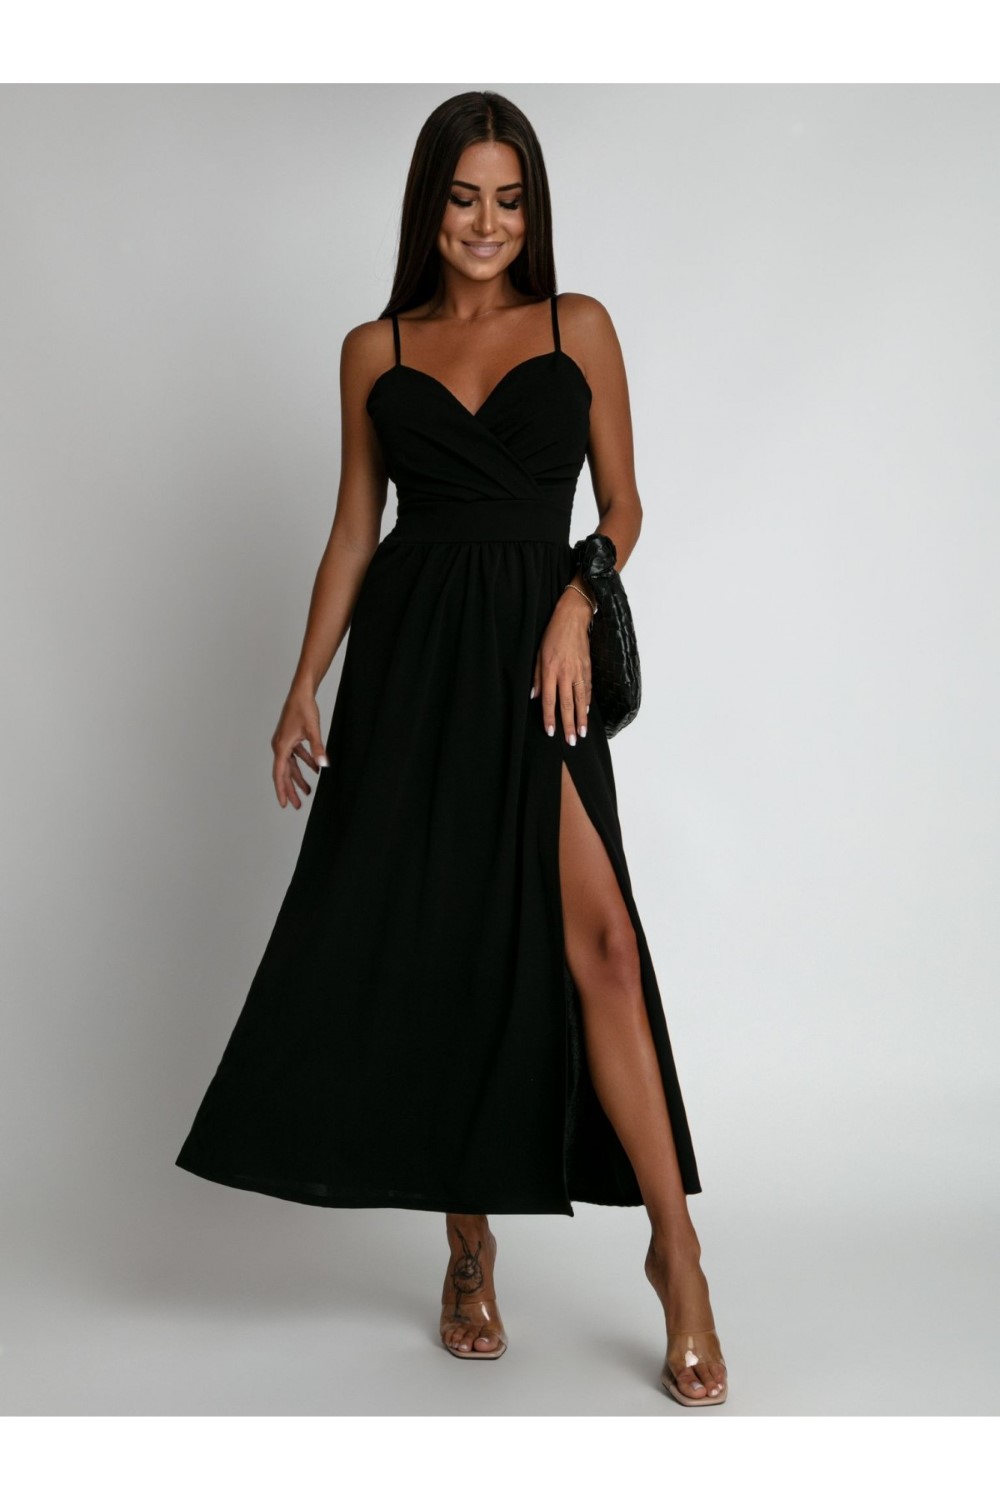 Black maxi dress with straps